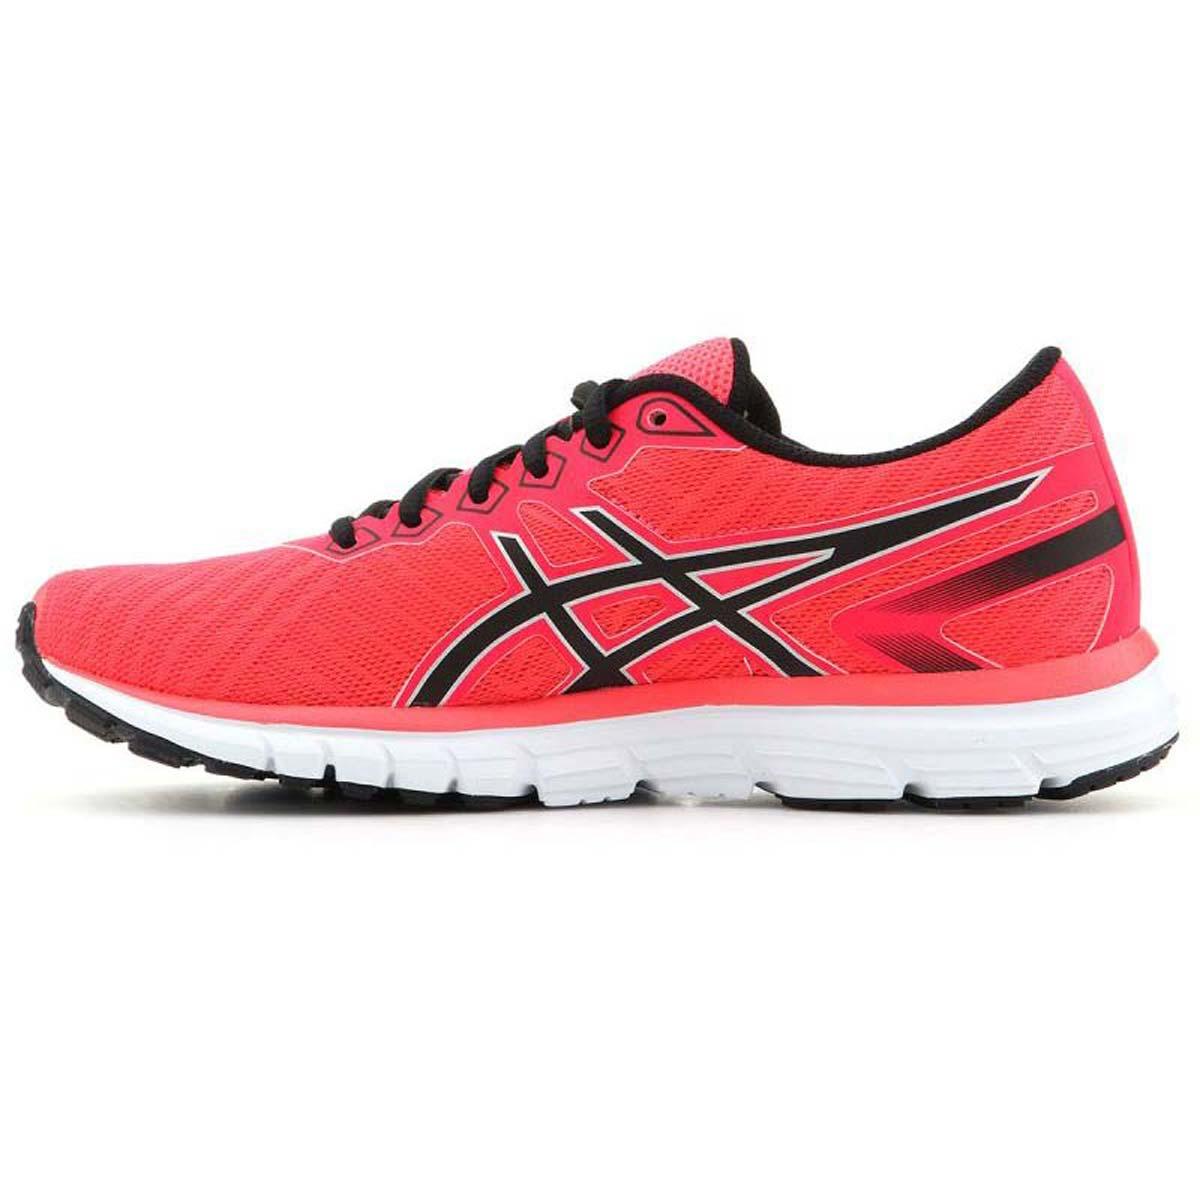 Buy Asics Gel - Zaraca 5 Women's Running Shoes (Pink/Black) Online